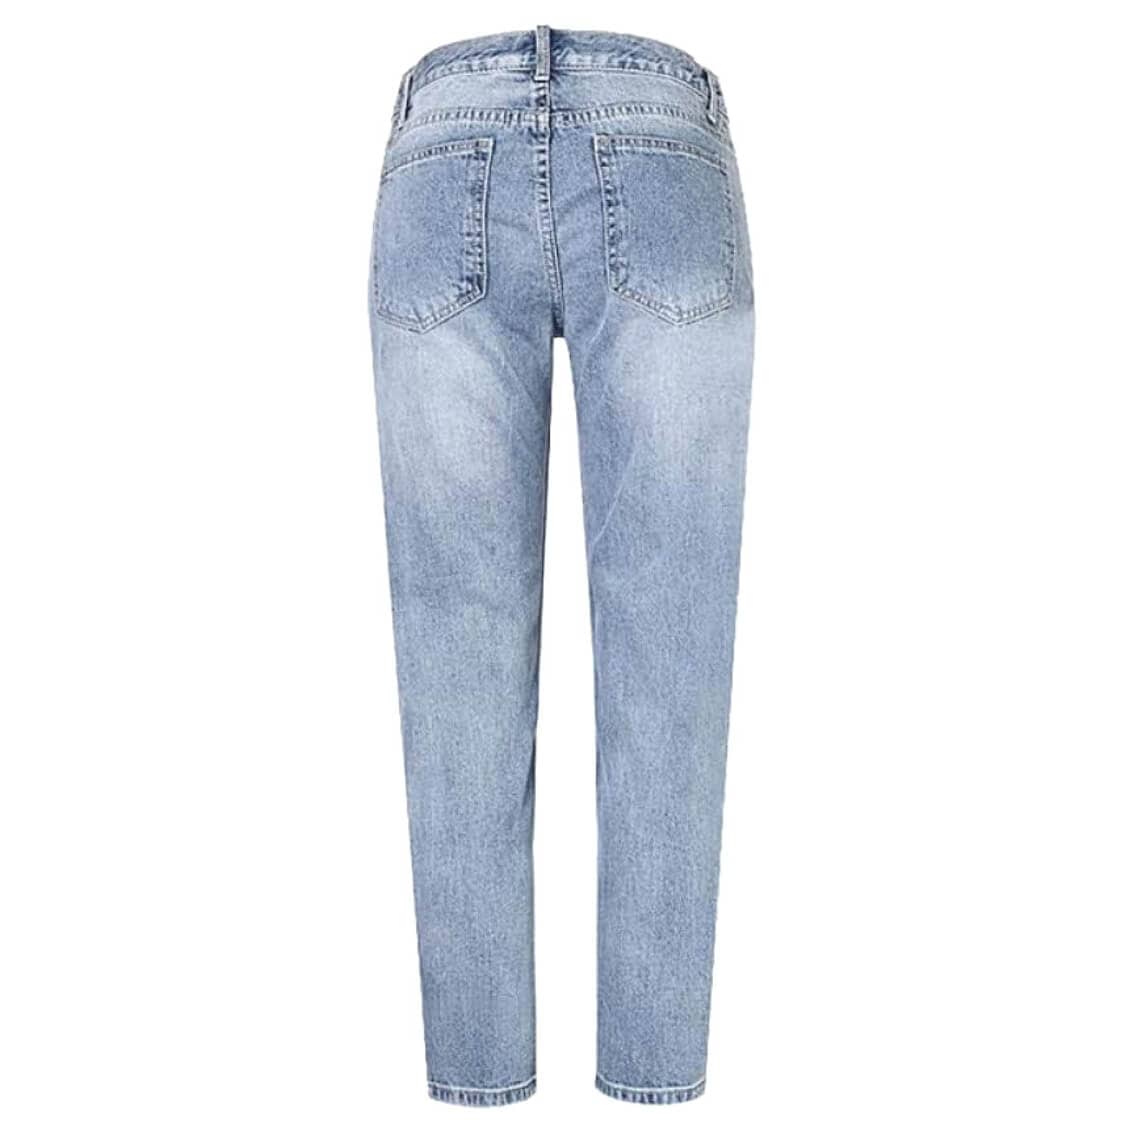 Silver Sequin Distressed Denim Jeans